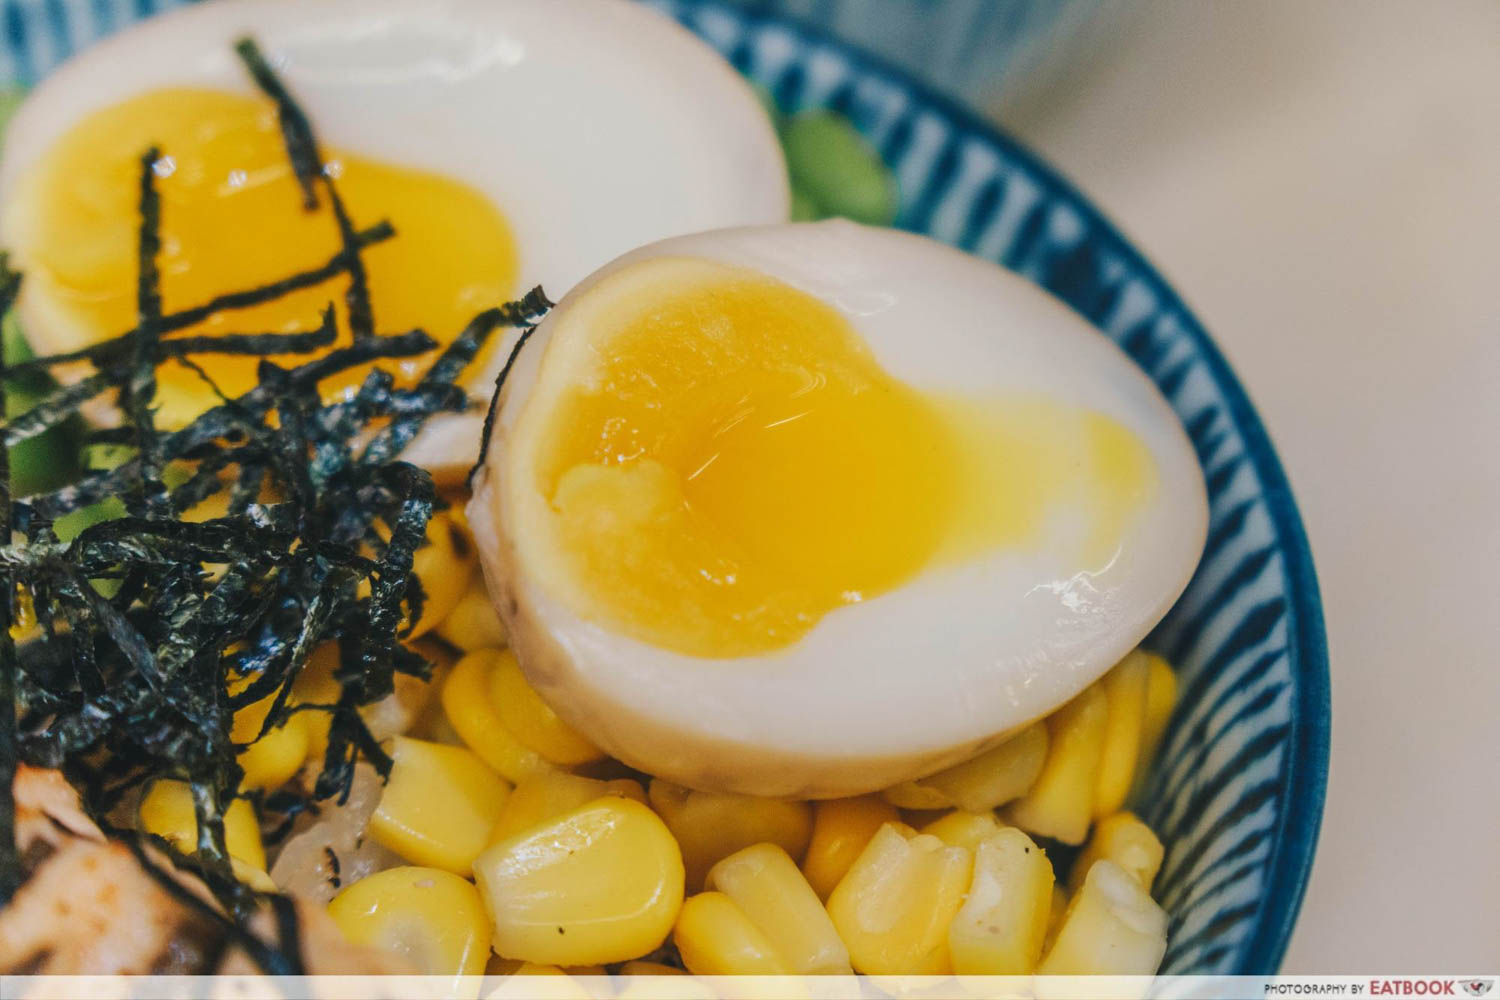 TORCHED meat platter - rice bowl lava egg